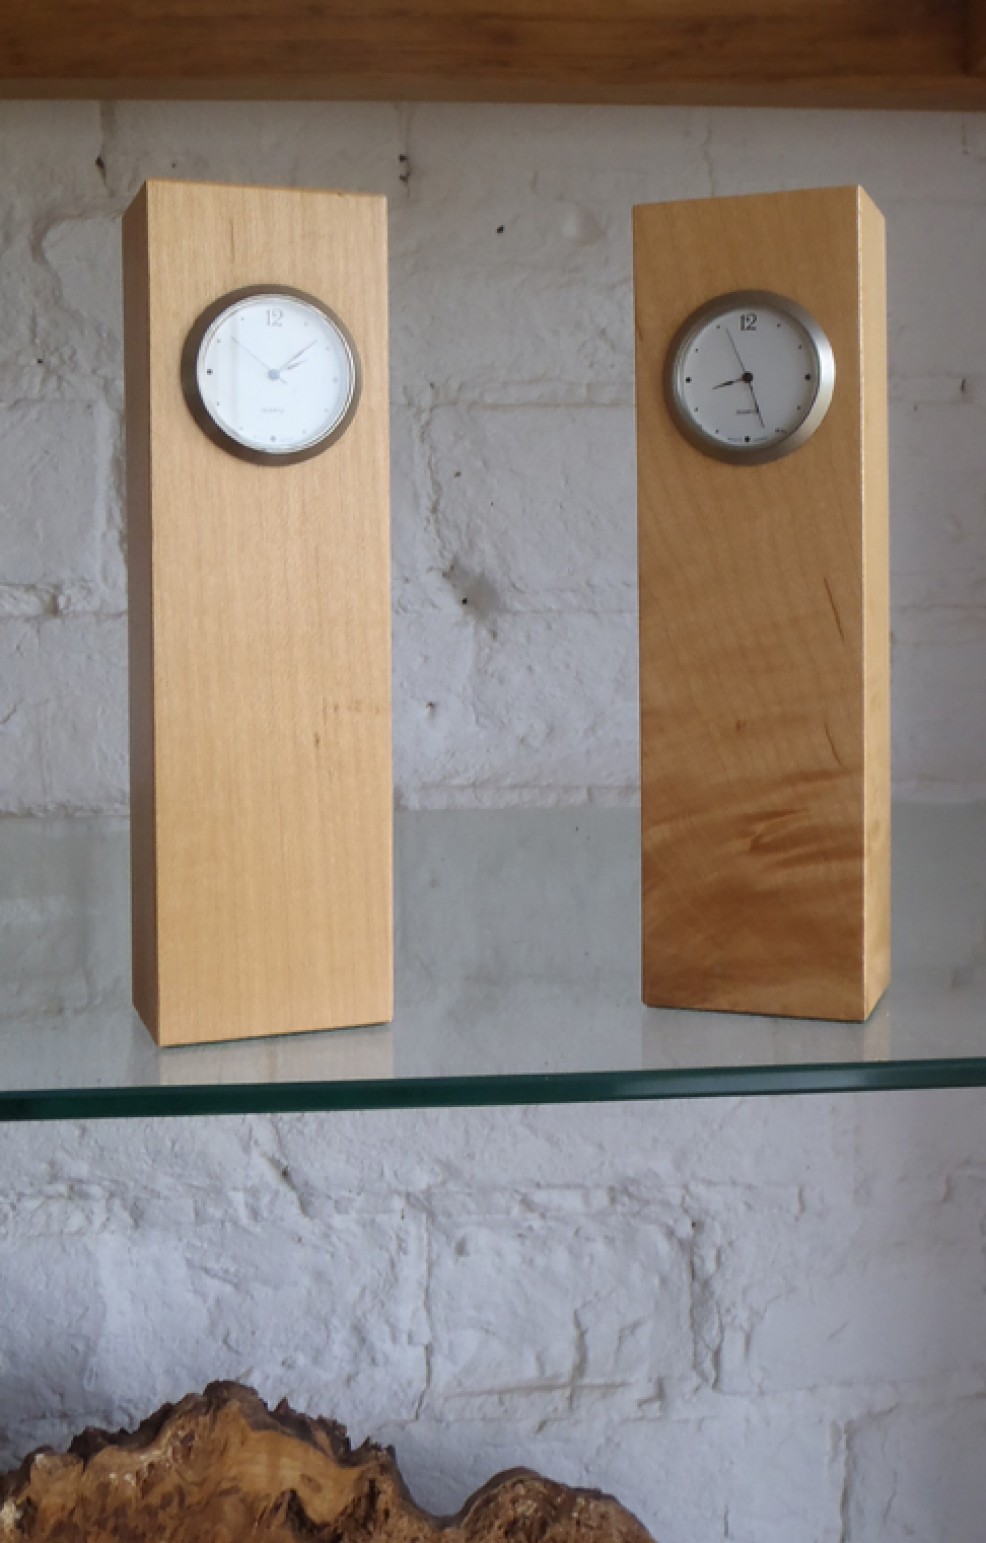 Small and tall clocks